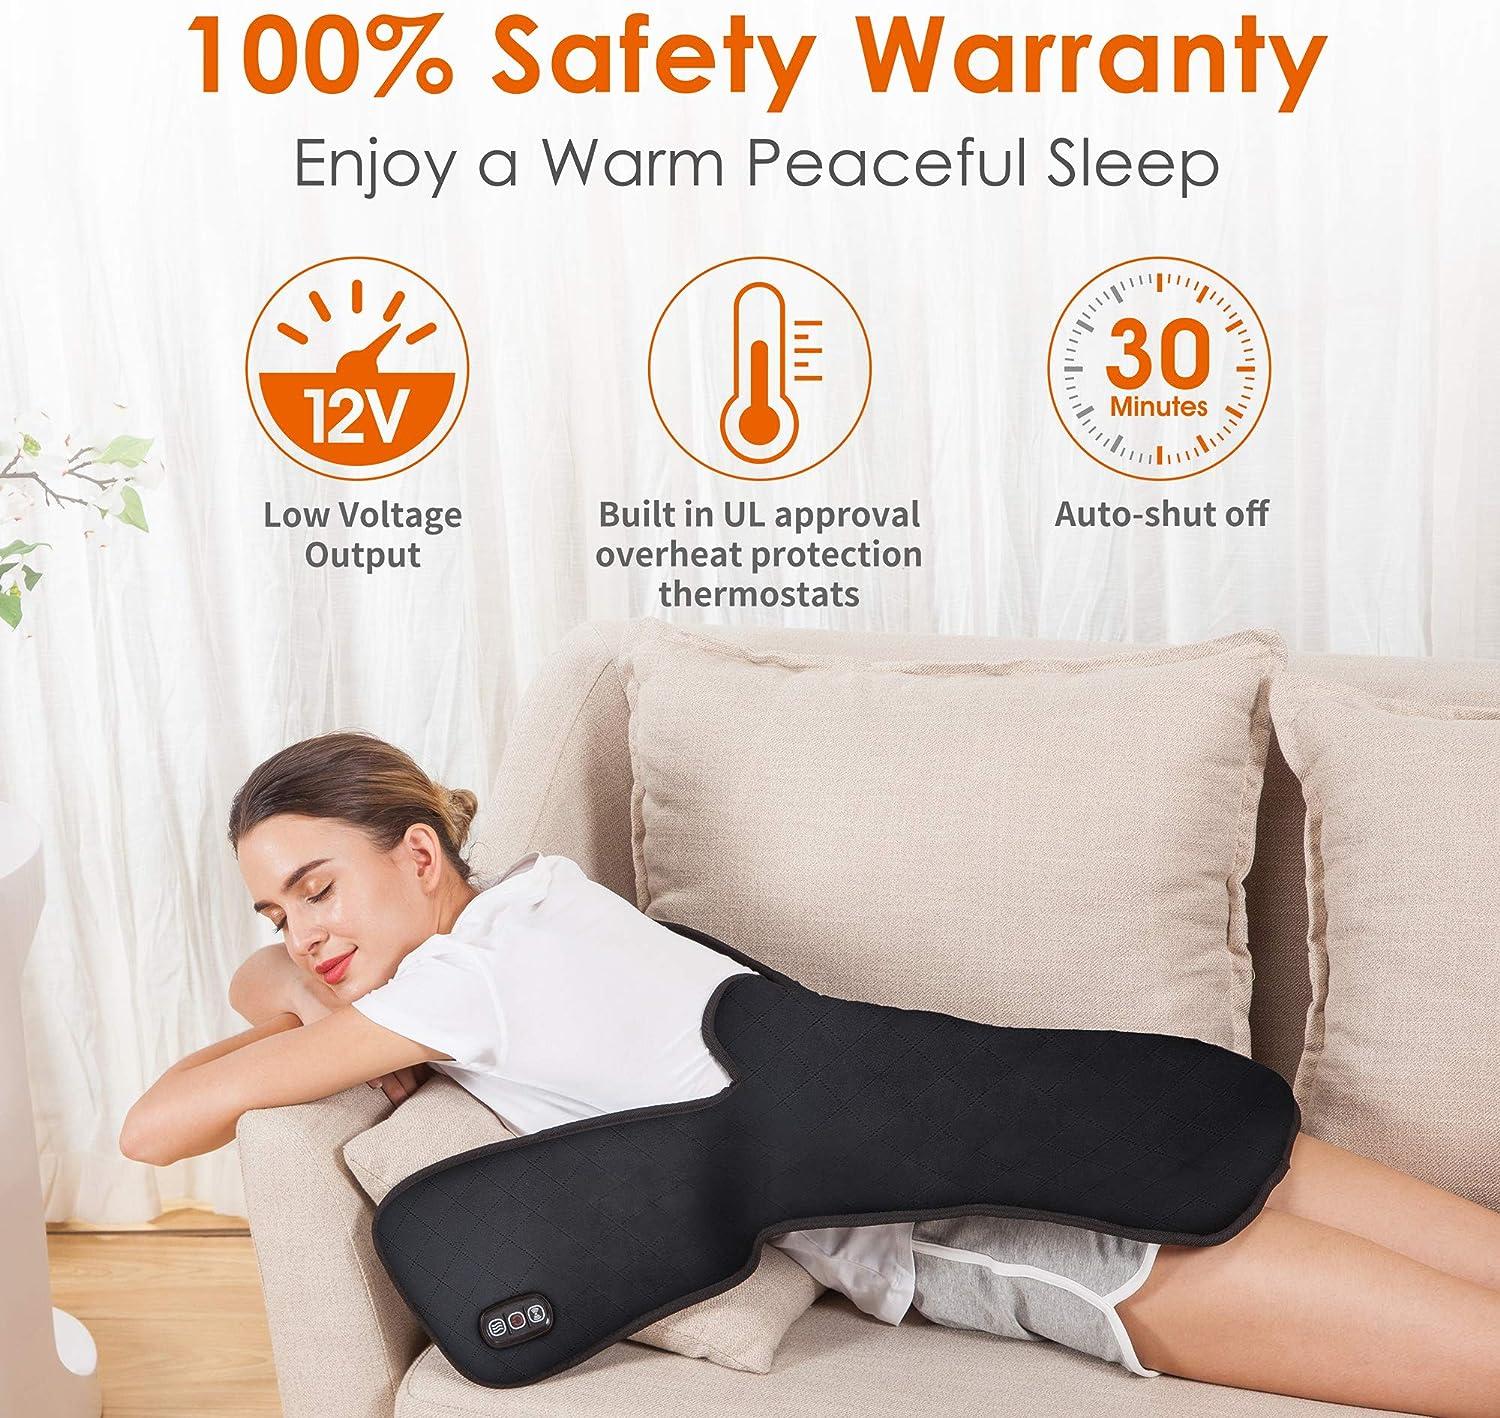  SNAILAX Memory Foam Massage Mat 3-in-1 Foot Warmer Bundle  6  Therapy Heating pad,10 Vibration Motors Massage Mattress Pad, Full Body  Massager Cushion Relieve Neck, Back, Waist, Legs Pain : Health